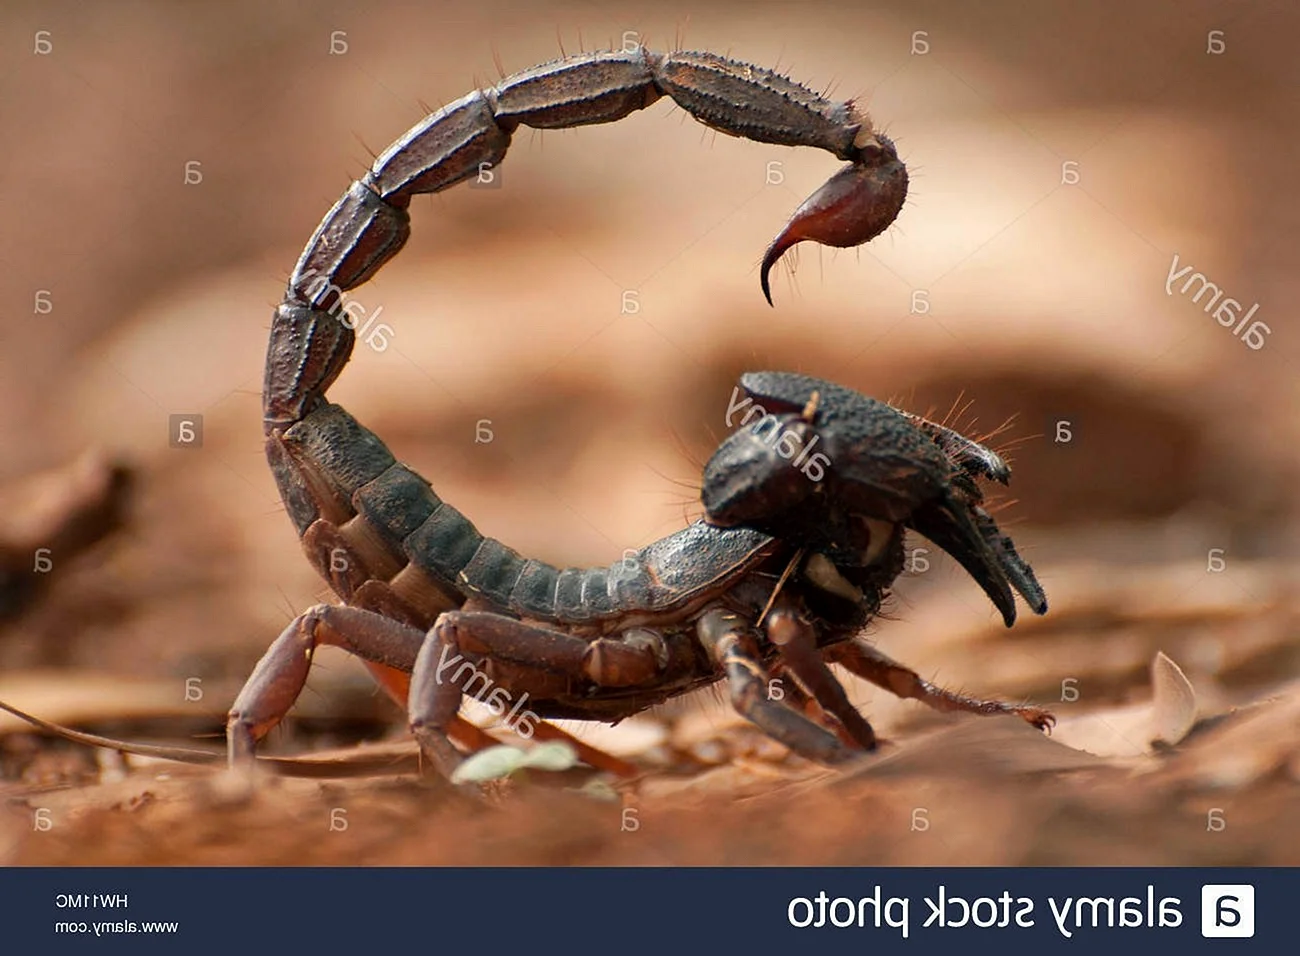 Скорпион Microbothus pusillus